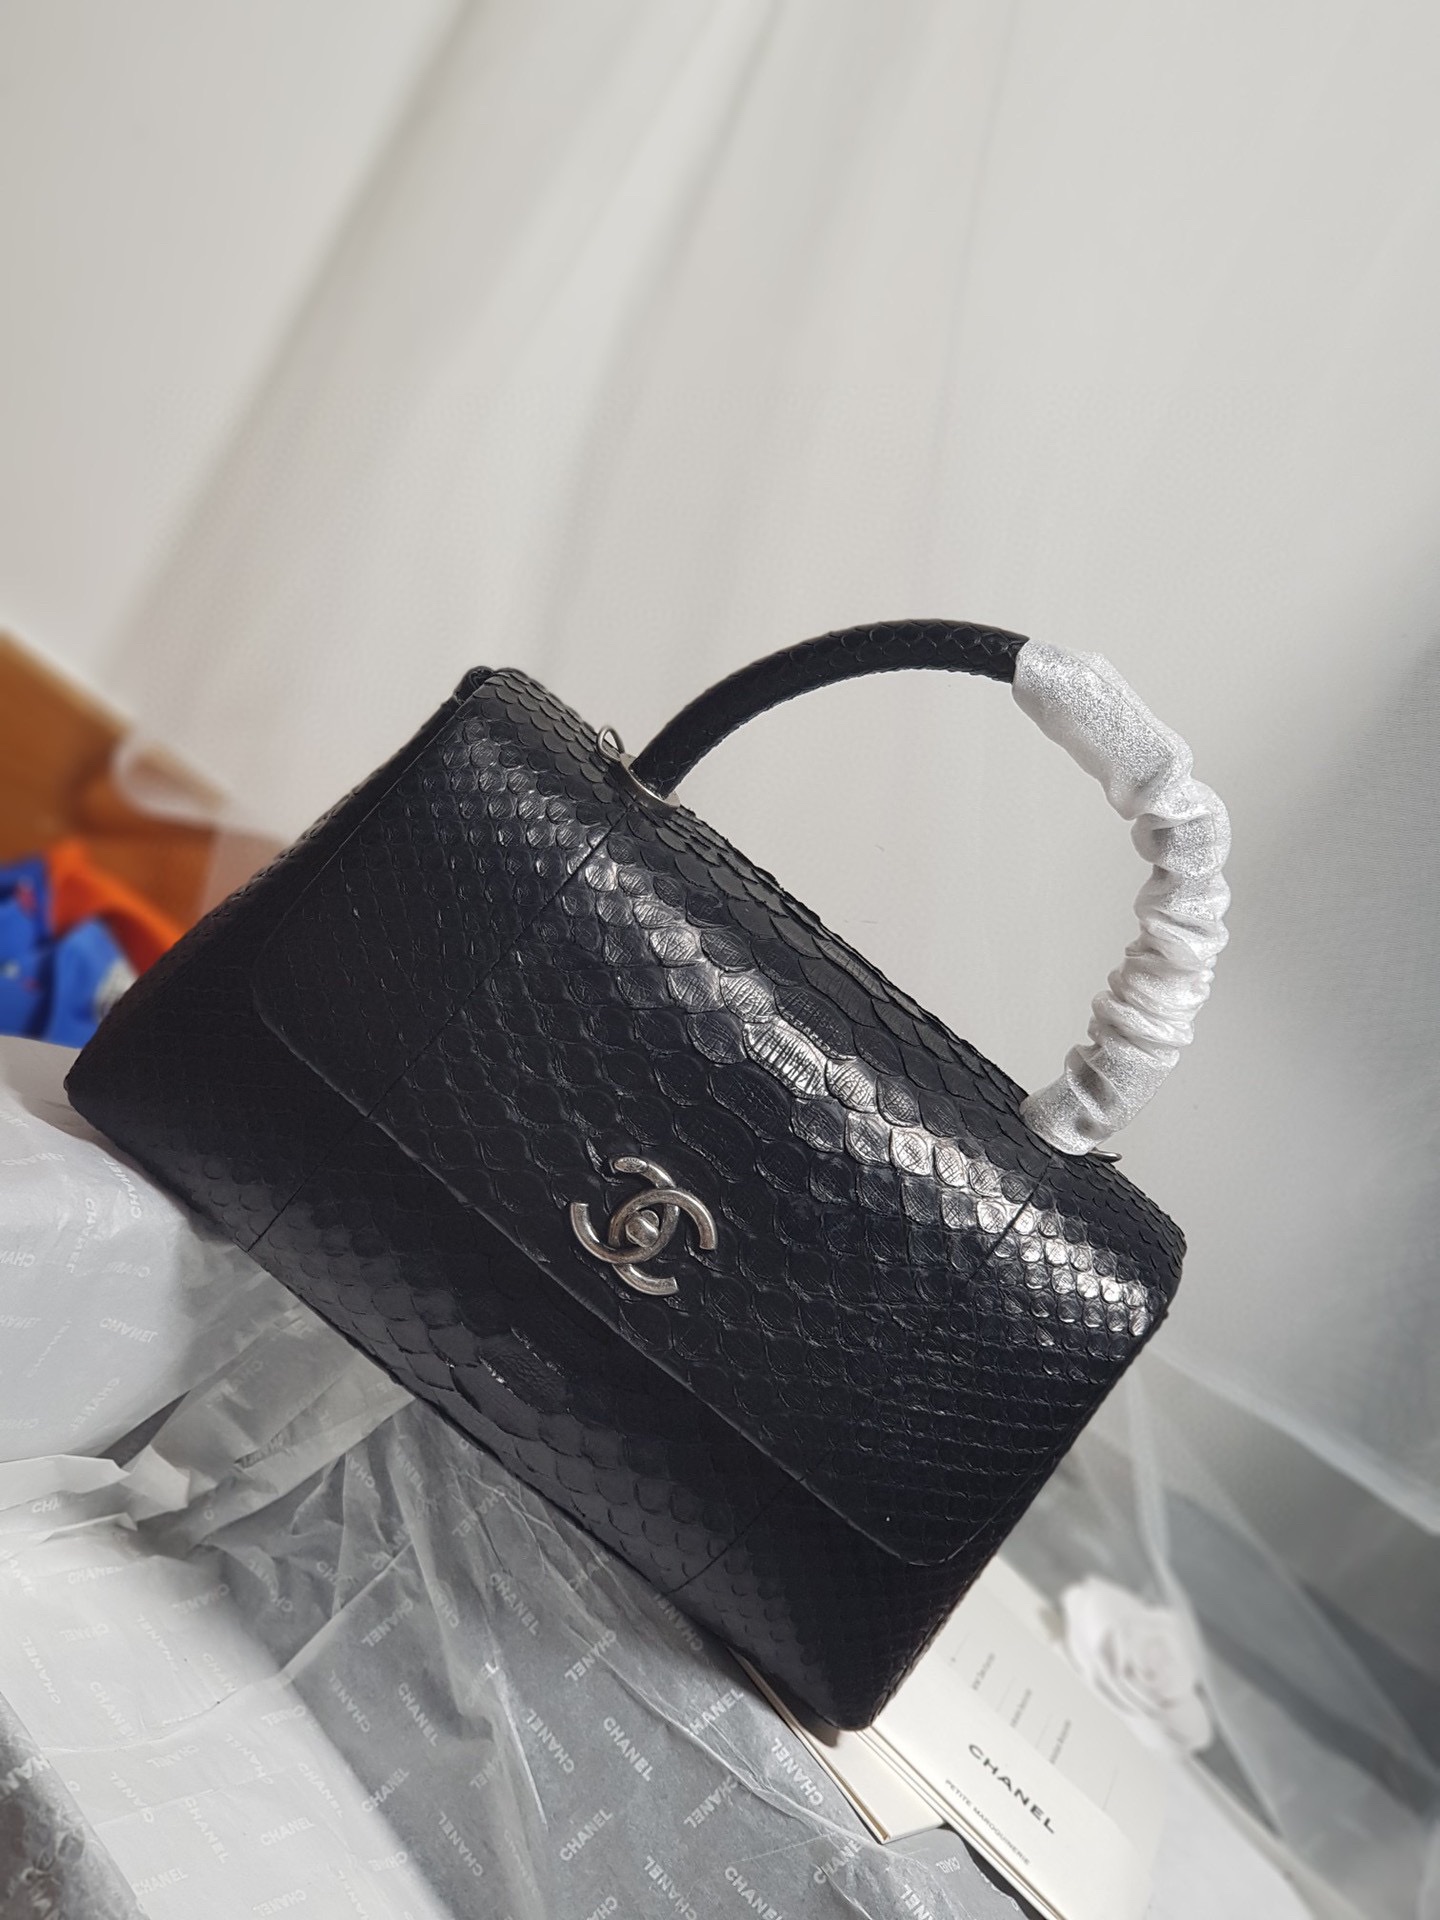 Chanel Classic Flap Bag Crossbody & Shoulder Bags Lambskin Sheepskin Snake Skin